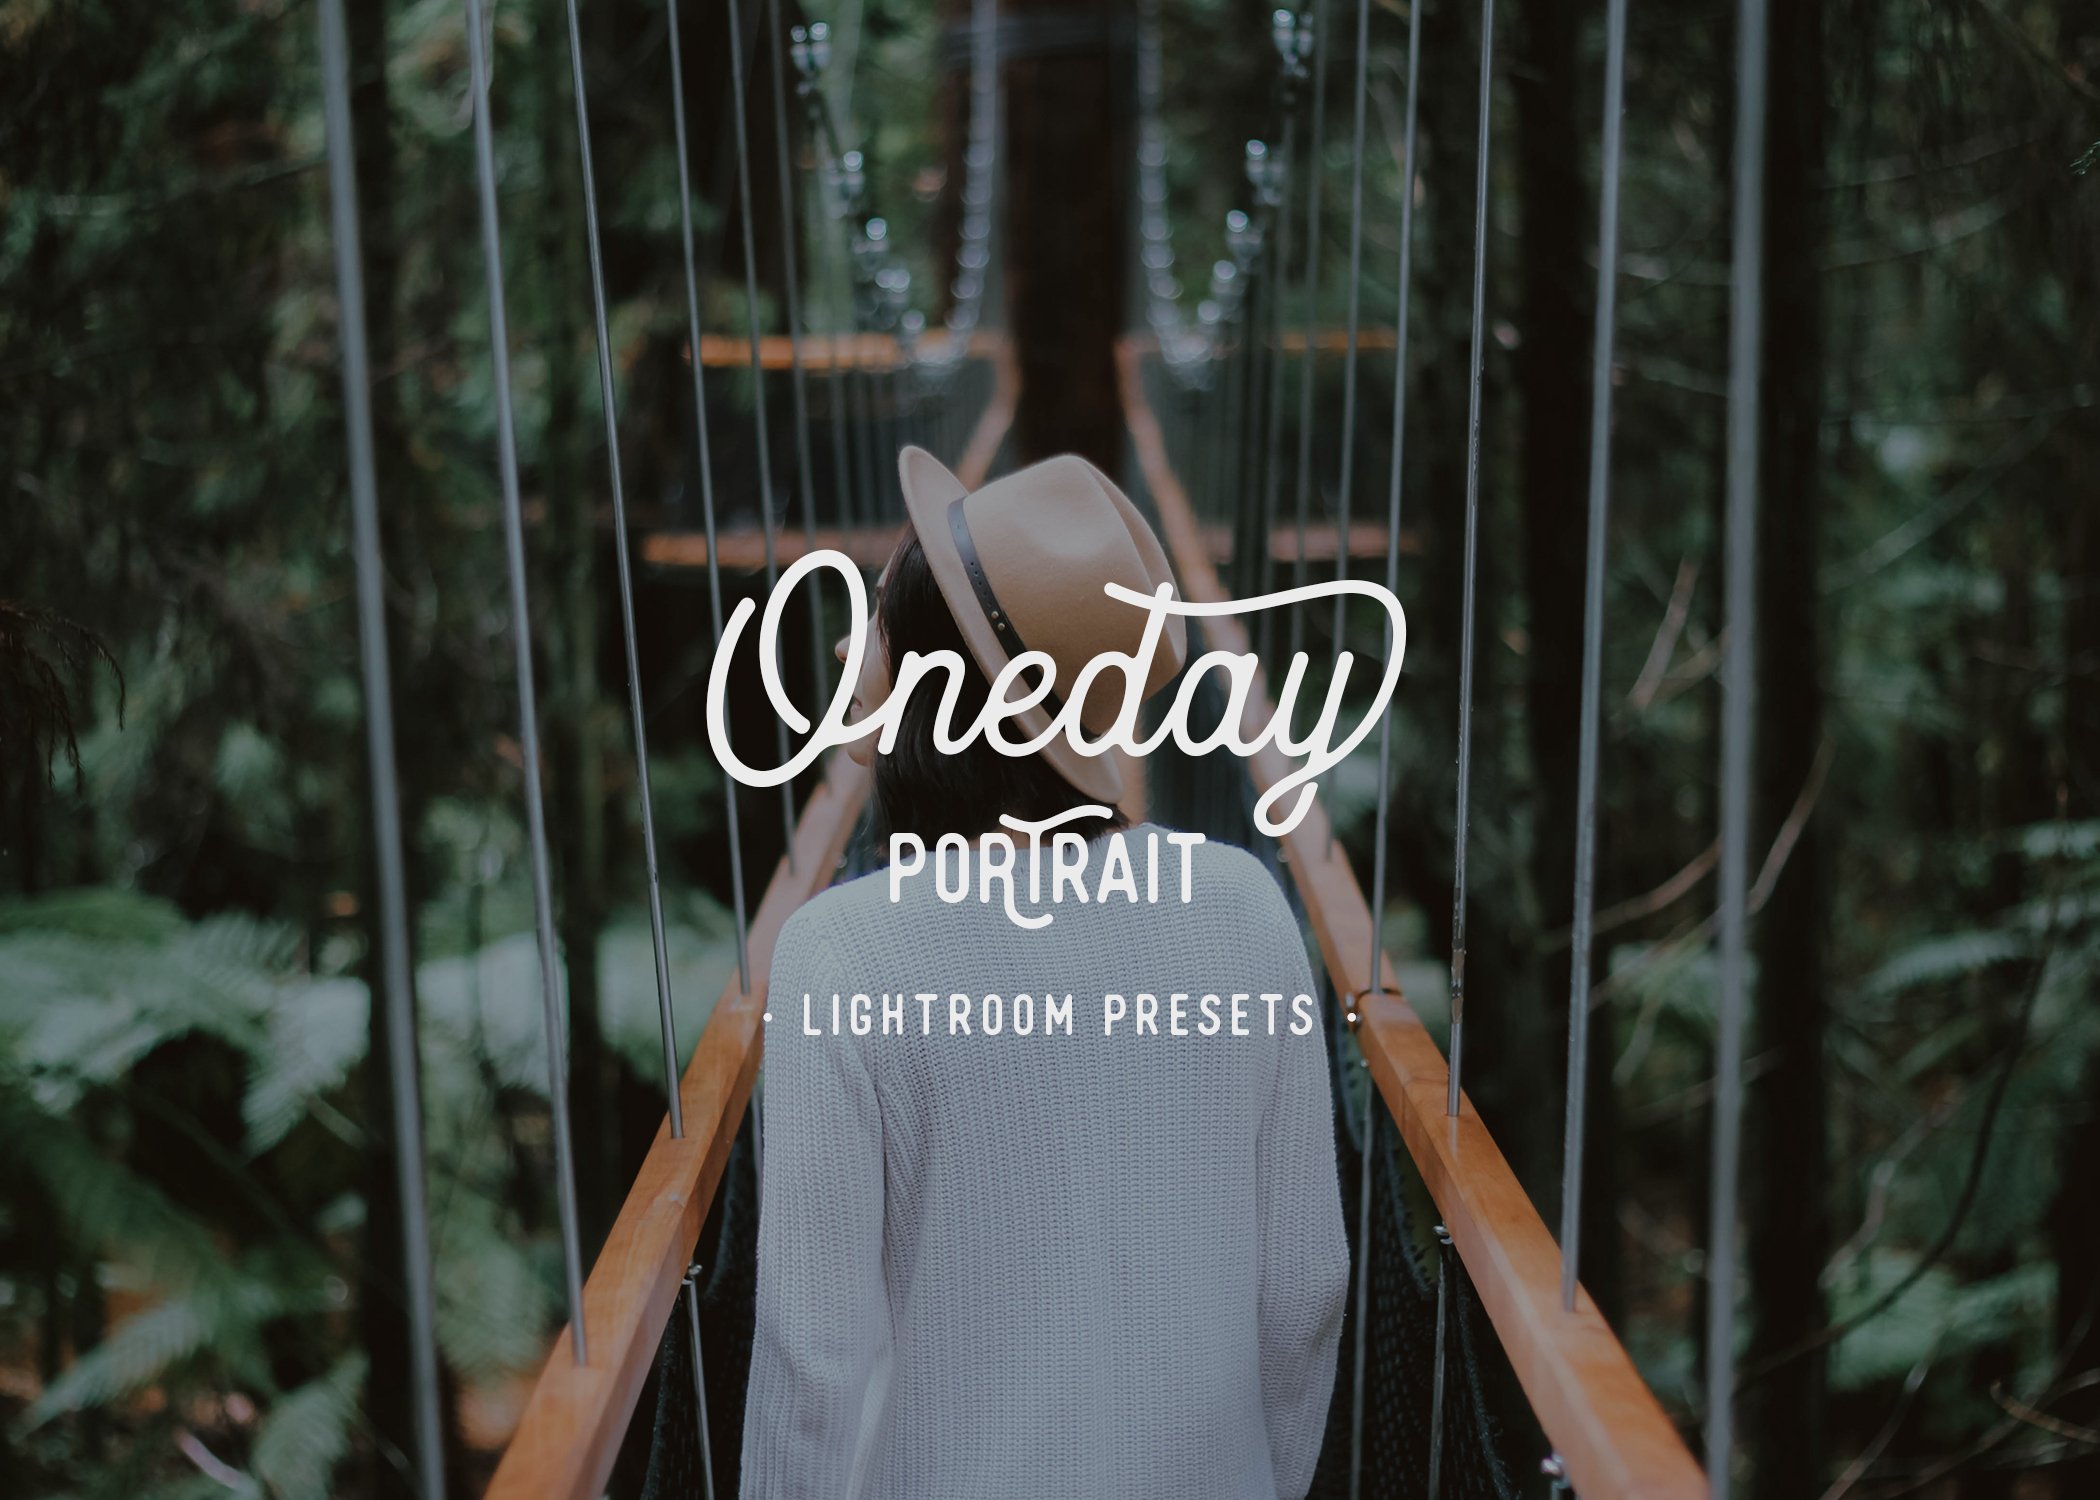 Oneday : Portrait Lightroom presetscover image.